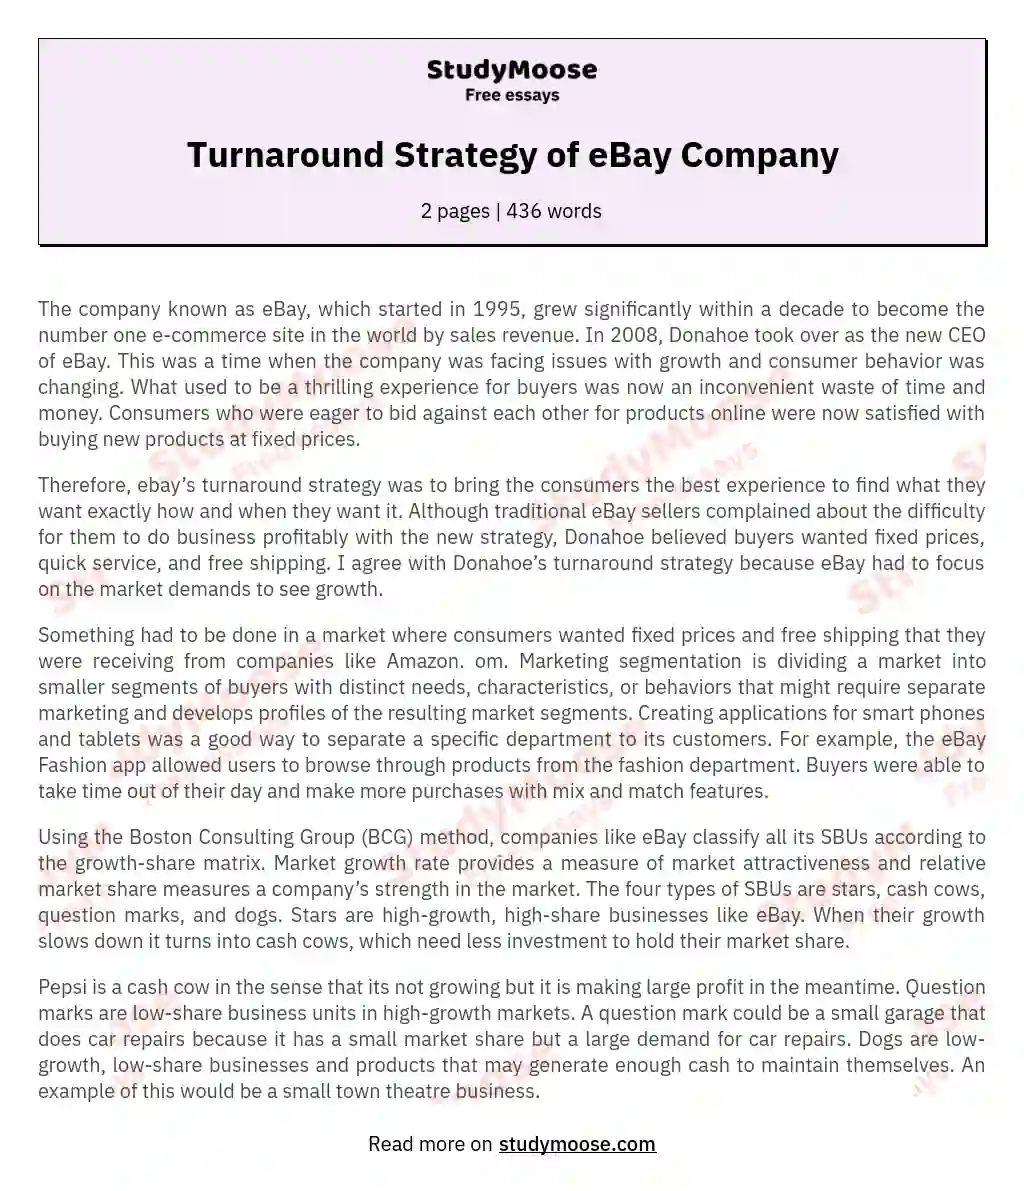 Turnaround Strategy of eBay Company